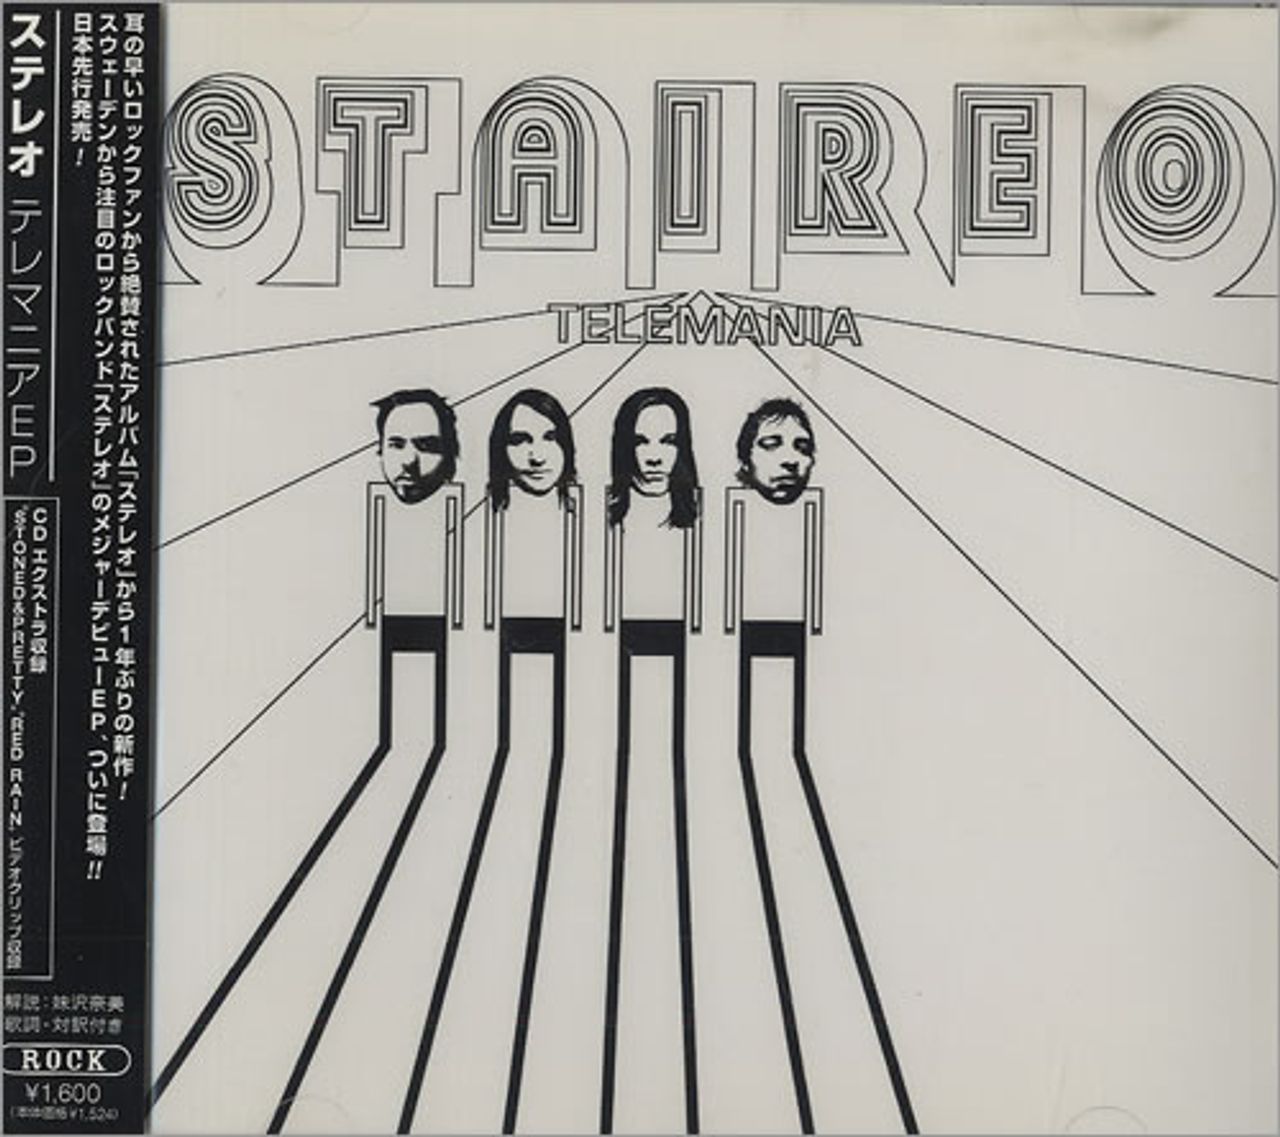 Staireo Telemania EP Japanese Promo CD single (CD5 / 5") NFCT-27022